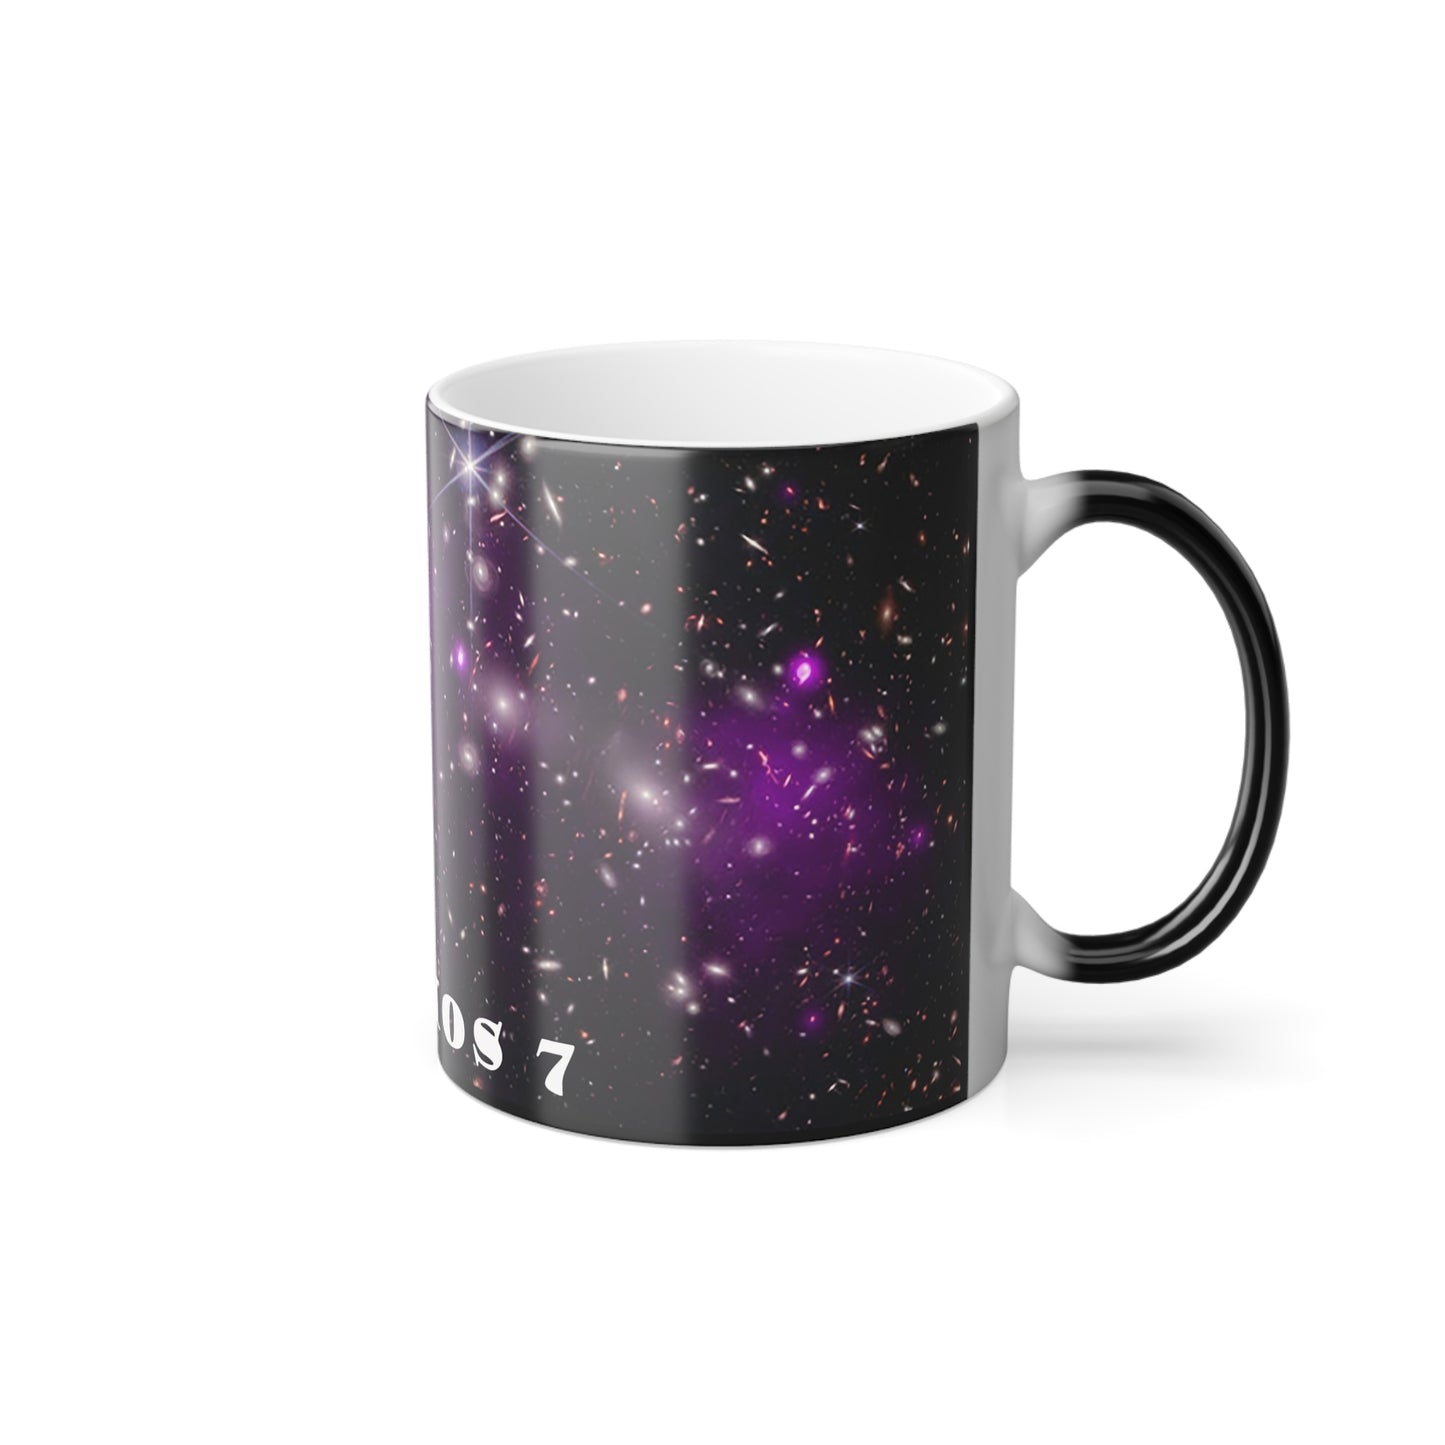 Magical Mug: Cosmos 7 Reveals the Universe with Heat 11oz